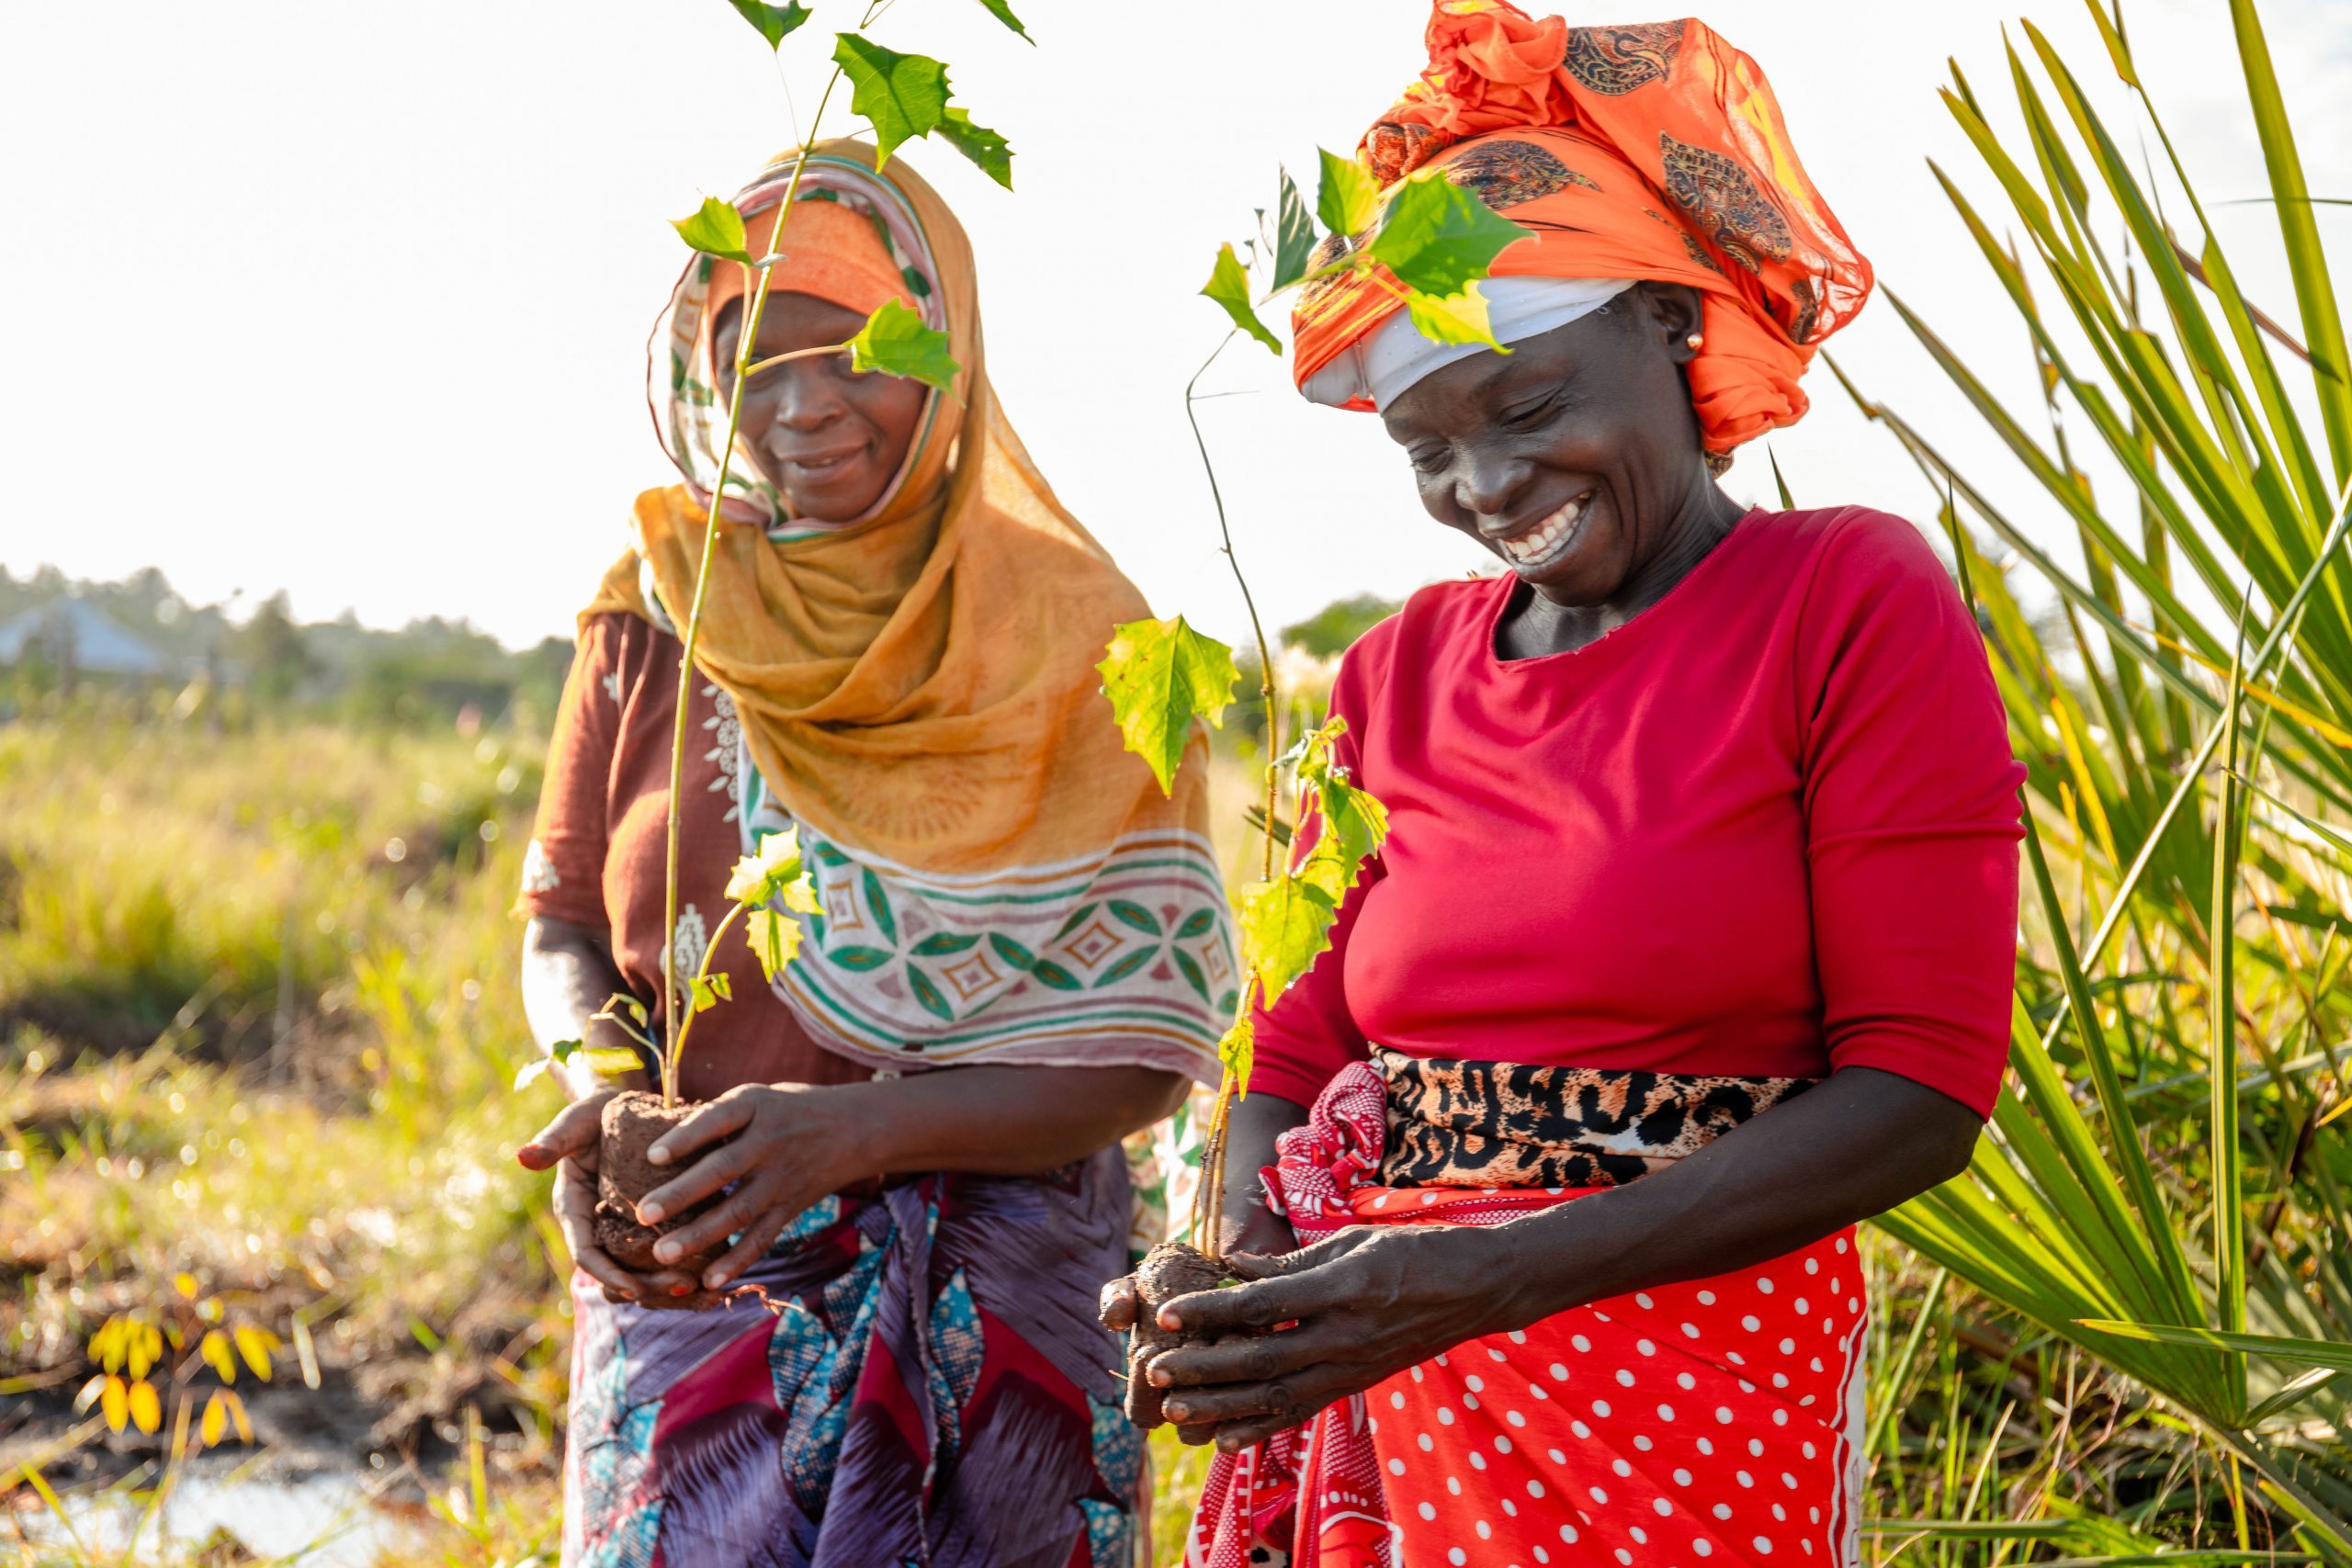 Local women planting trees, Tanzania